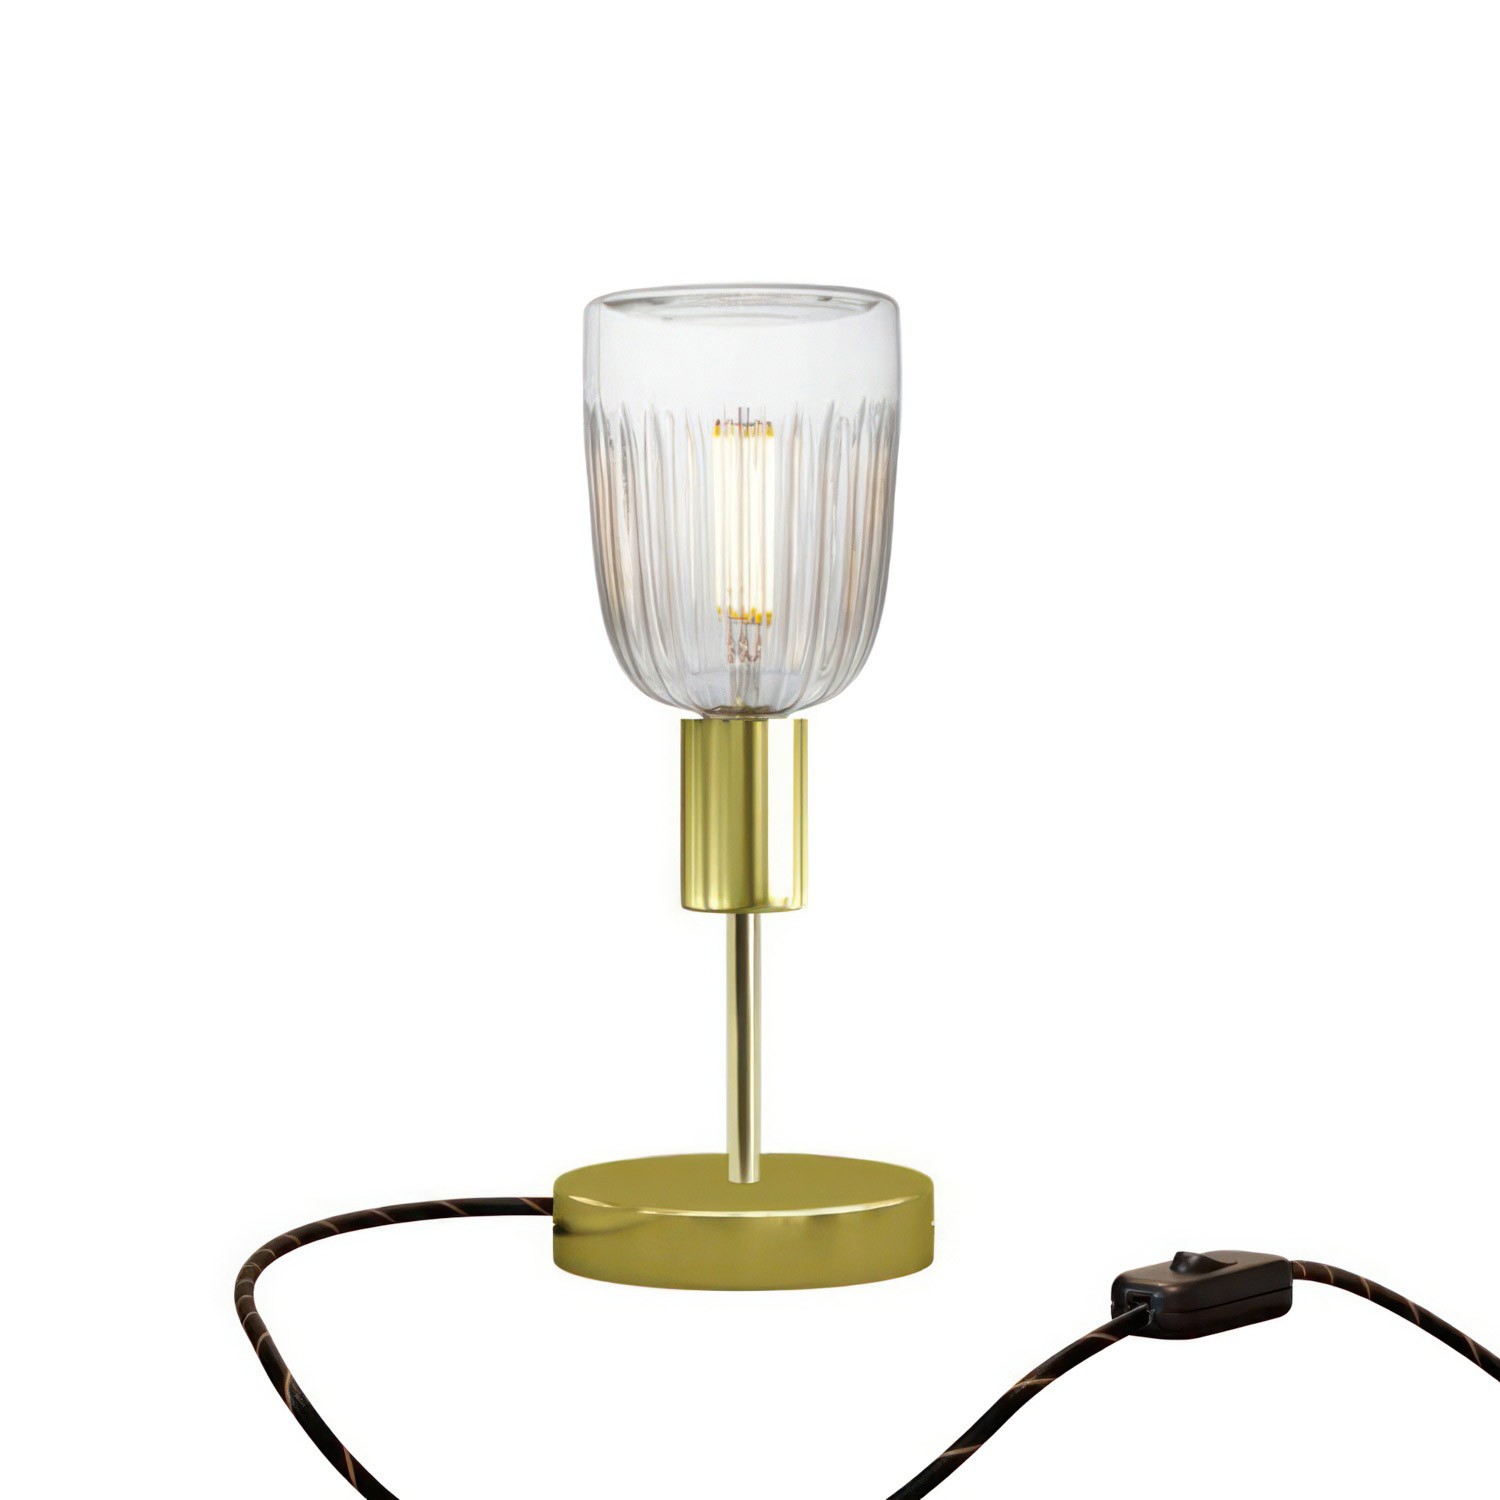 Alzaluce Tiche Metal Table Lamp with two-pin plug